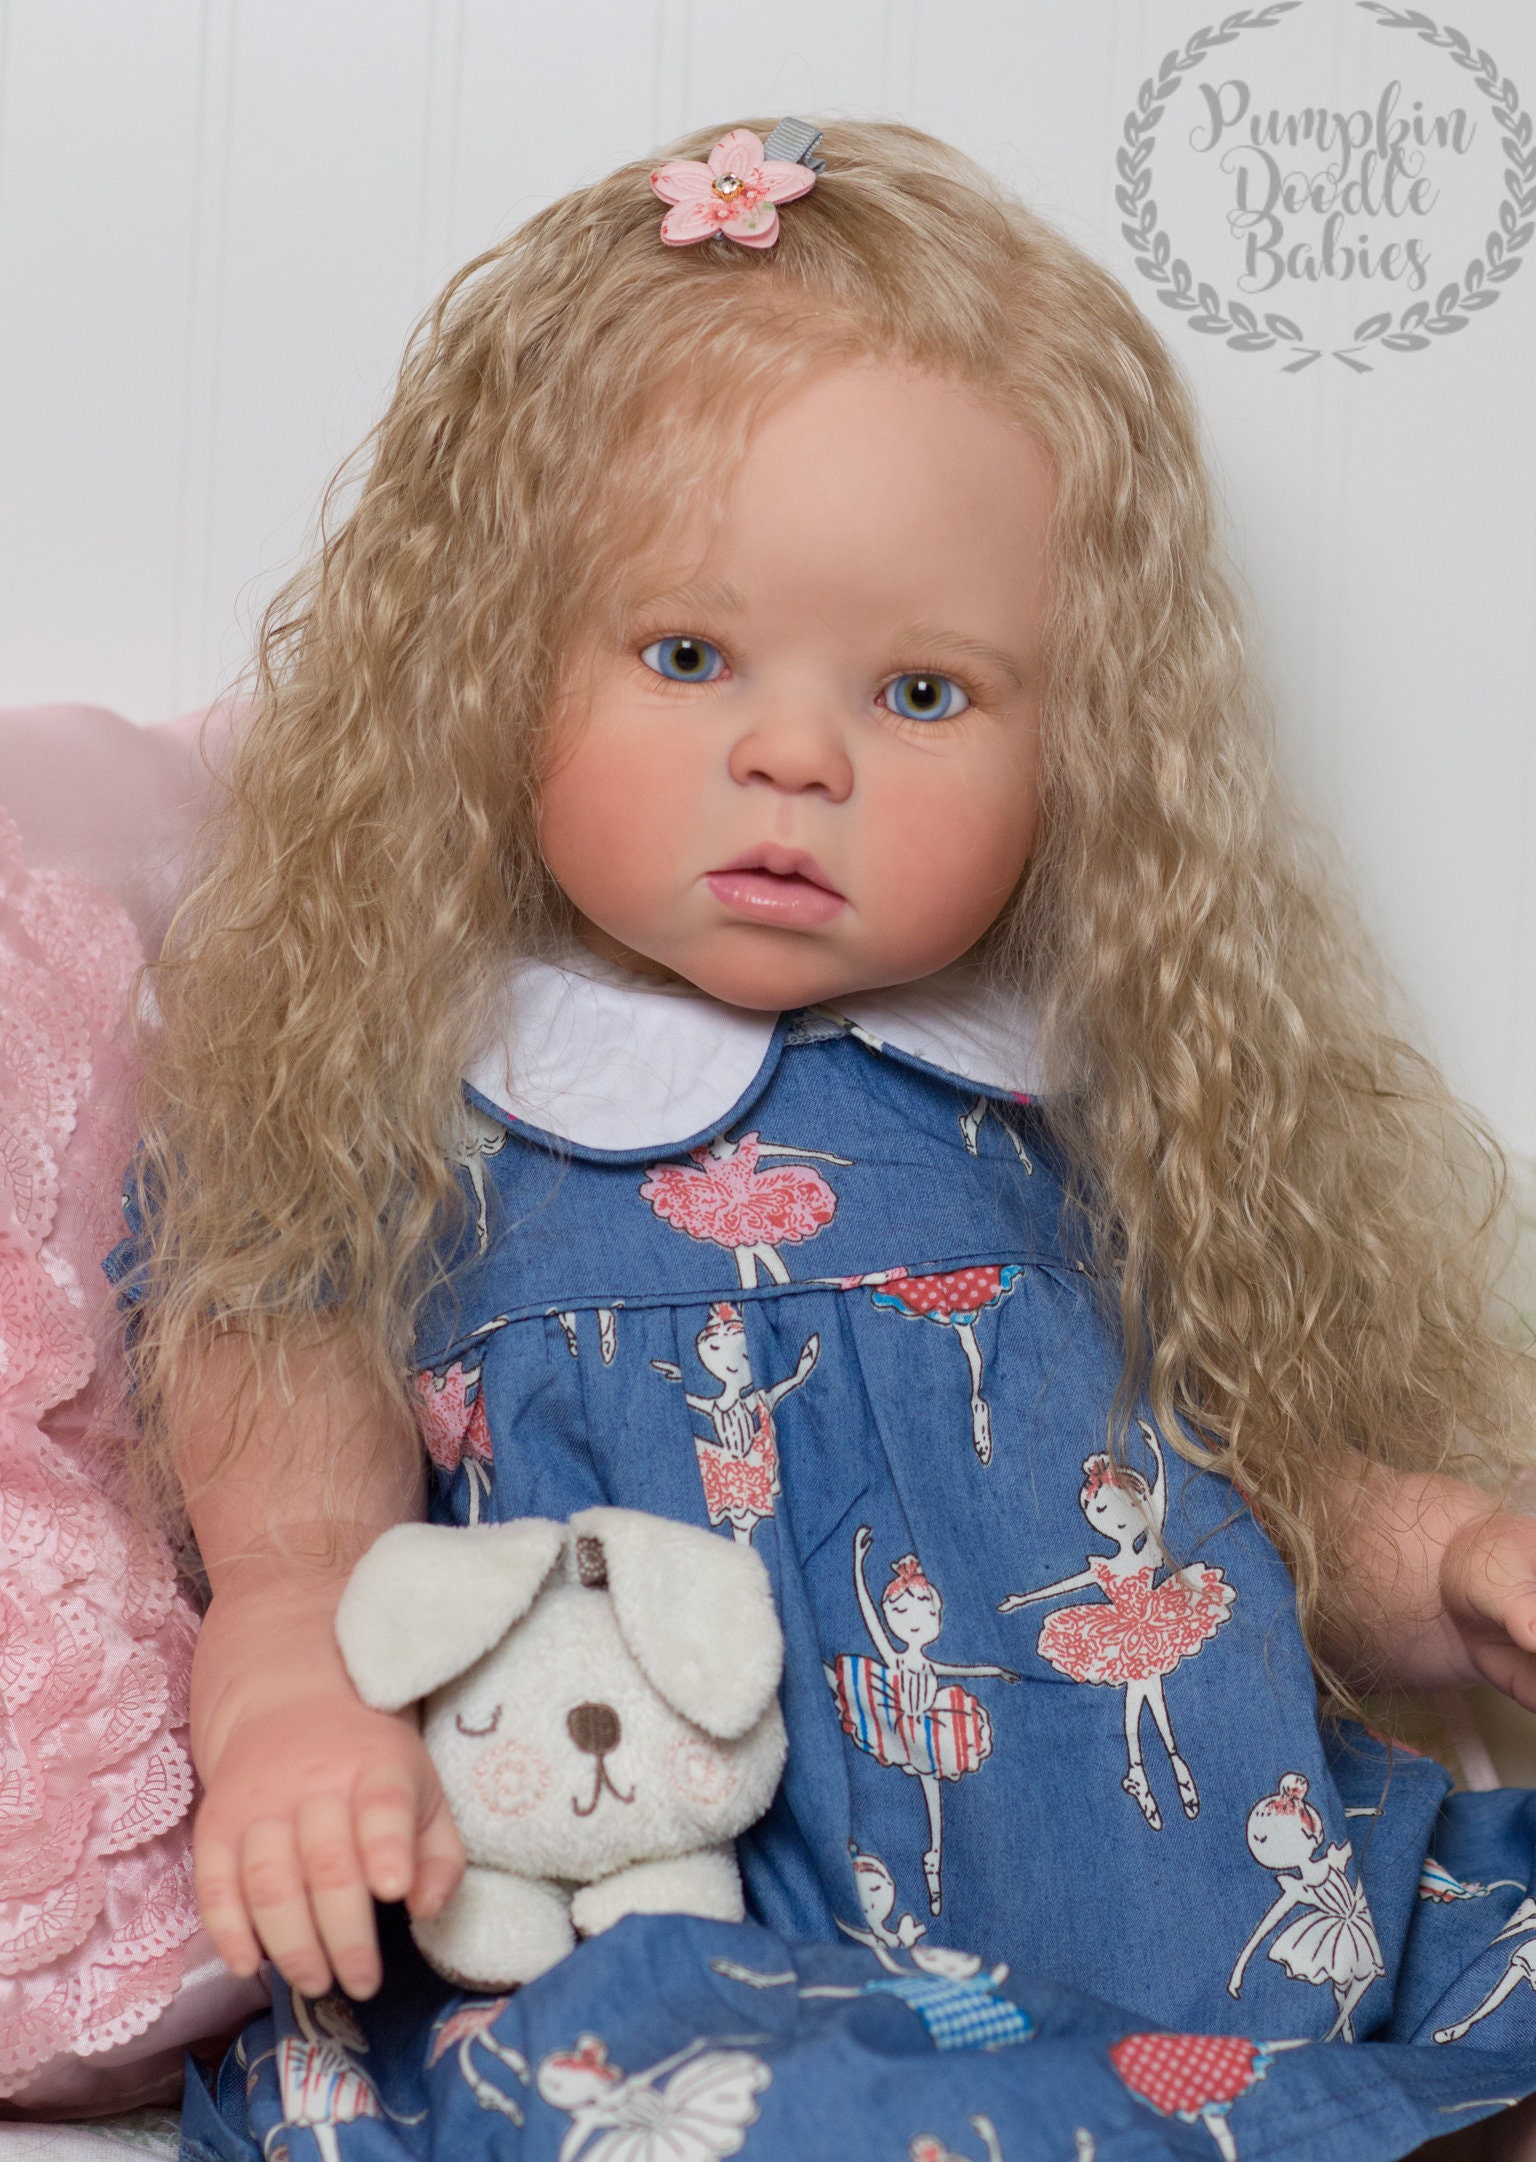 CUSTOM ORDER Reborn Toddler Doll Baby Girl Kathy by Regina - Etsy